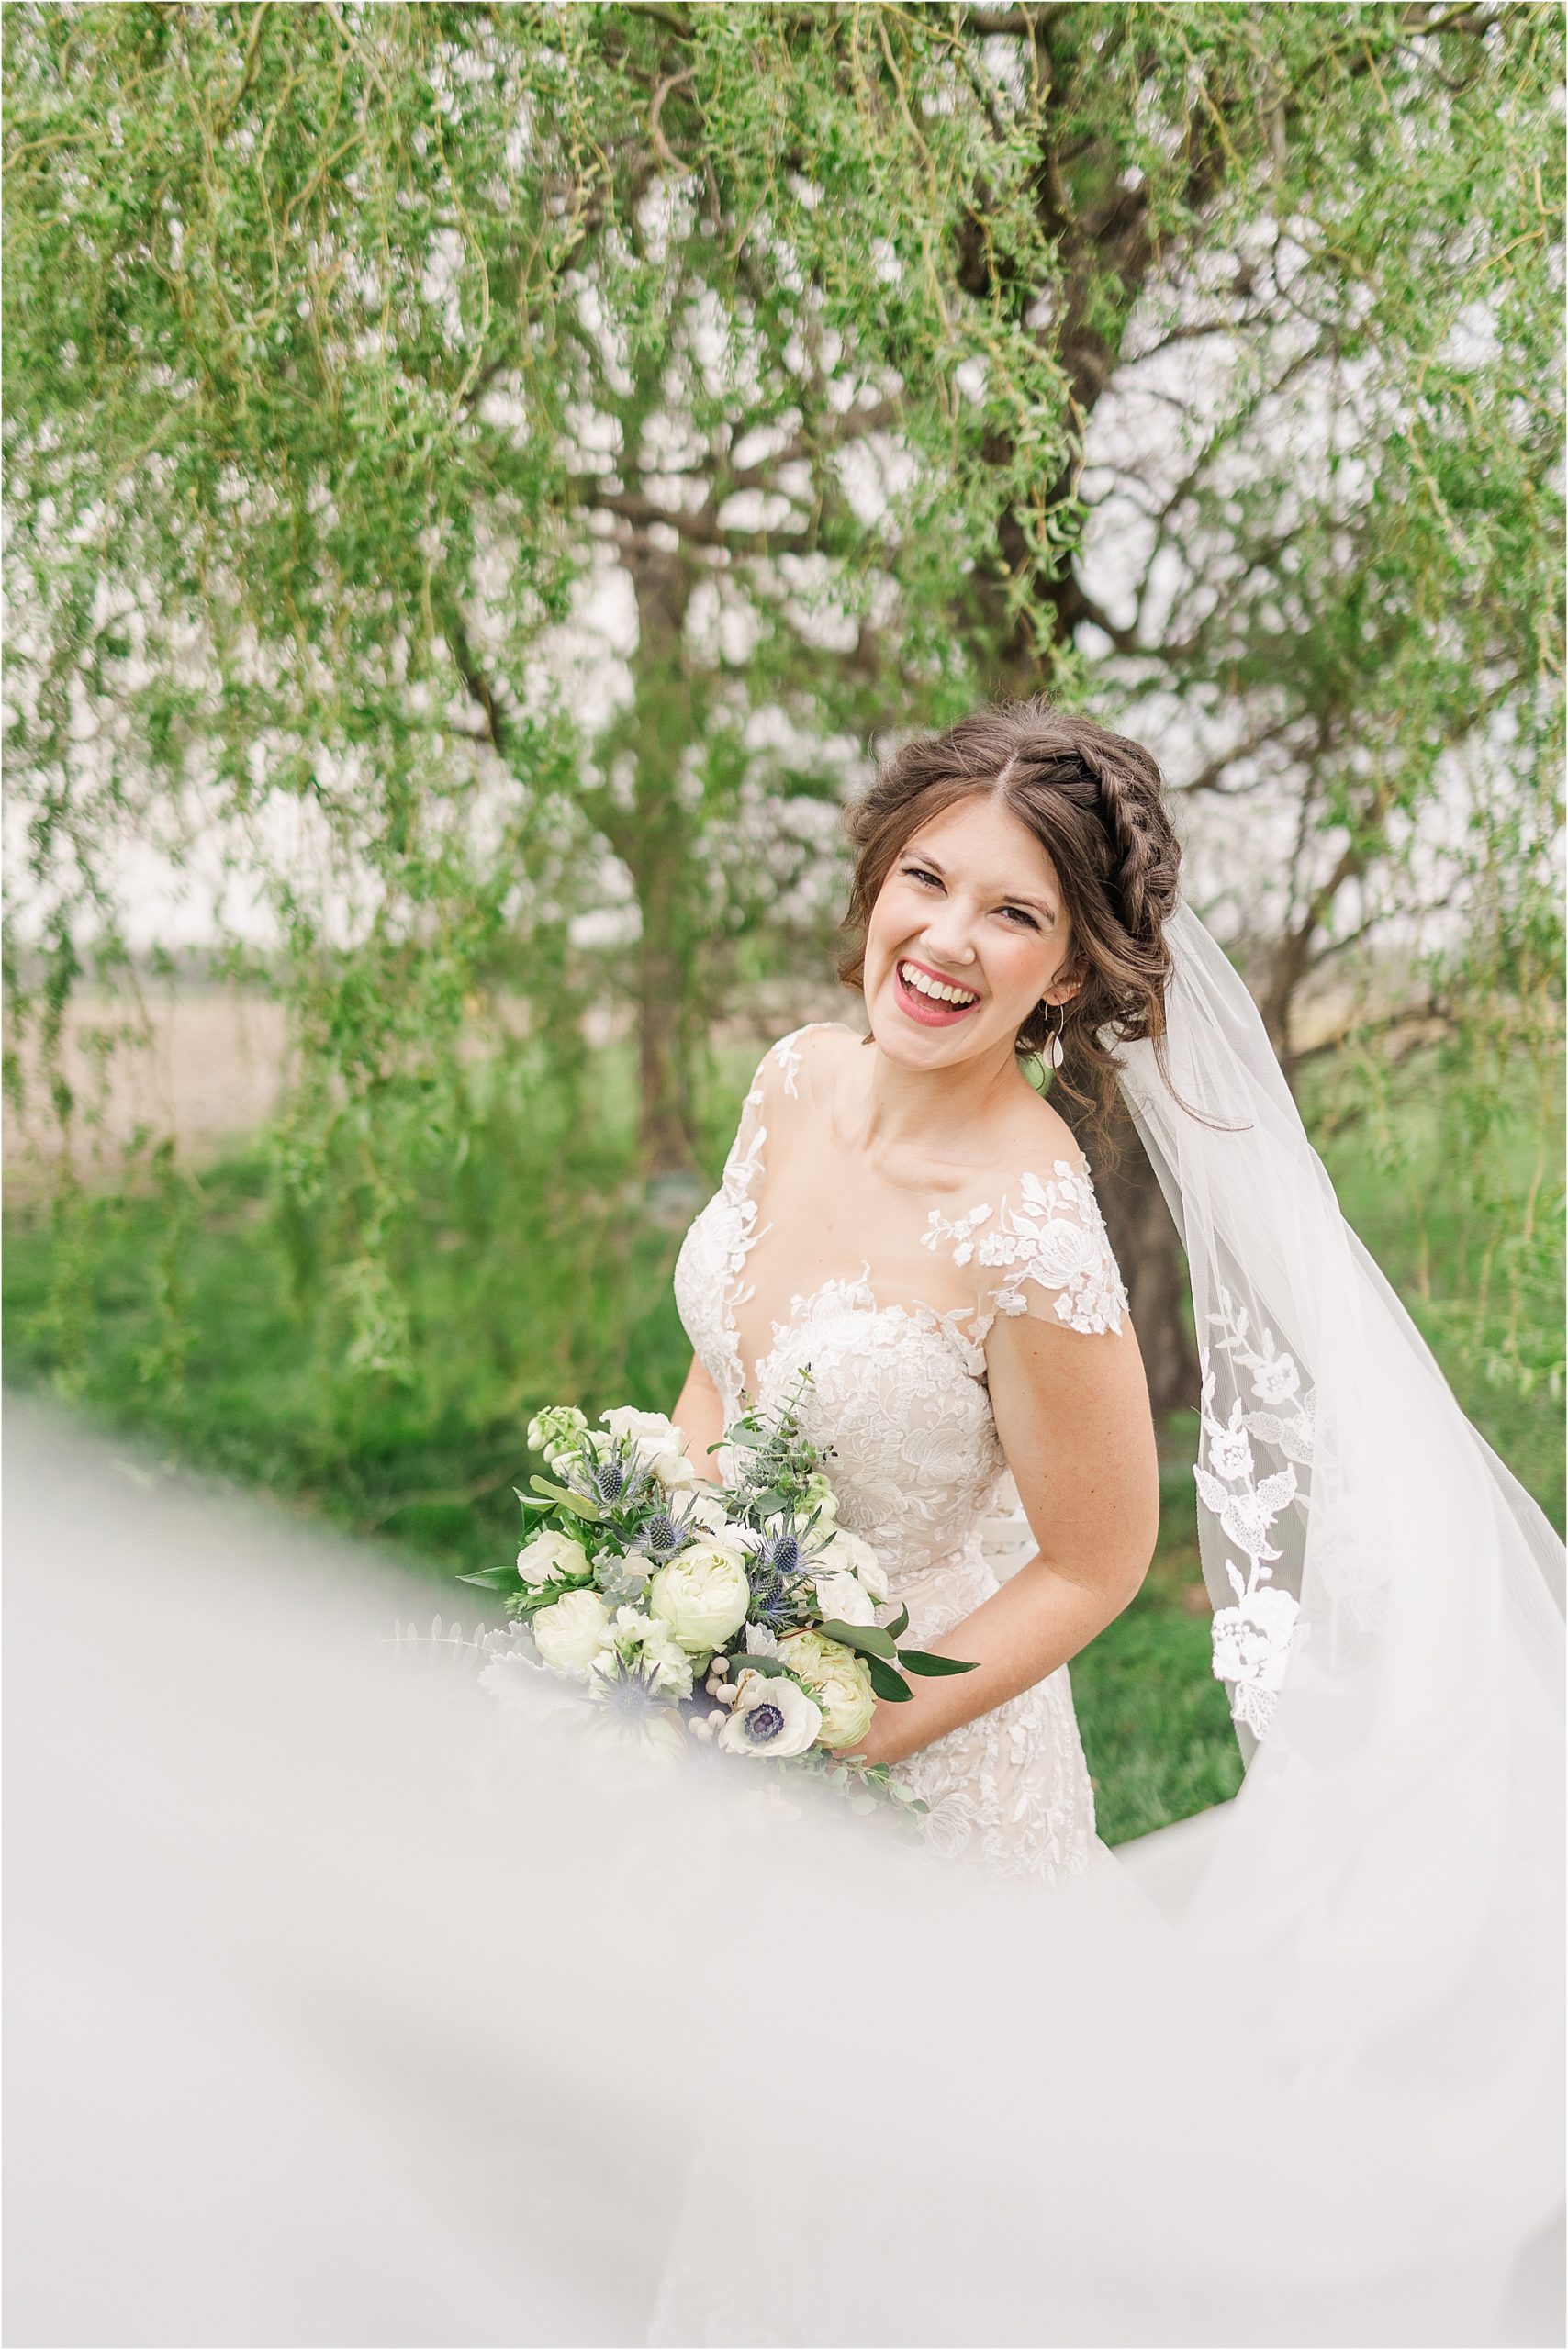 Blue and gold wedding inspiration at The Brownstone in Topeka, Kansas | Kelsey Alumbaugh Photography | #weddinginspiration #brownstoneTopeka #Springwedding #summerwedding #bluegoldwedding